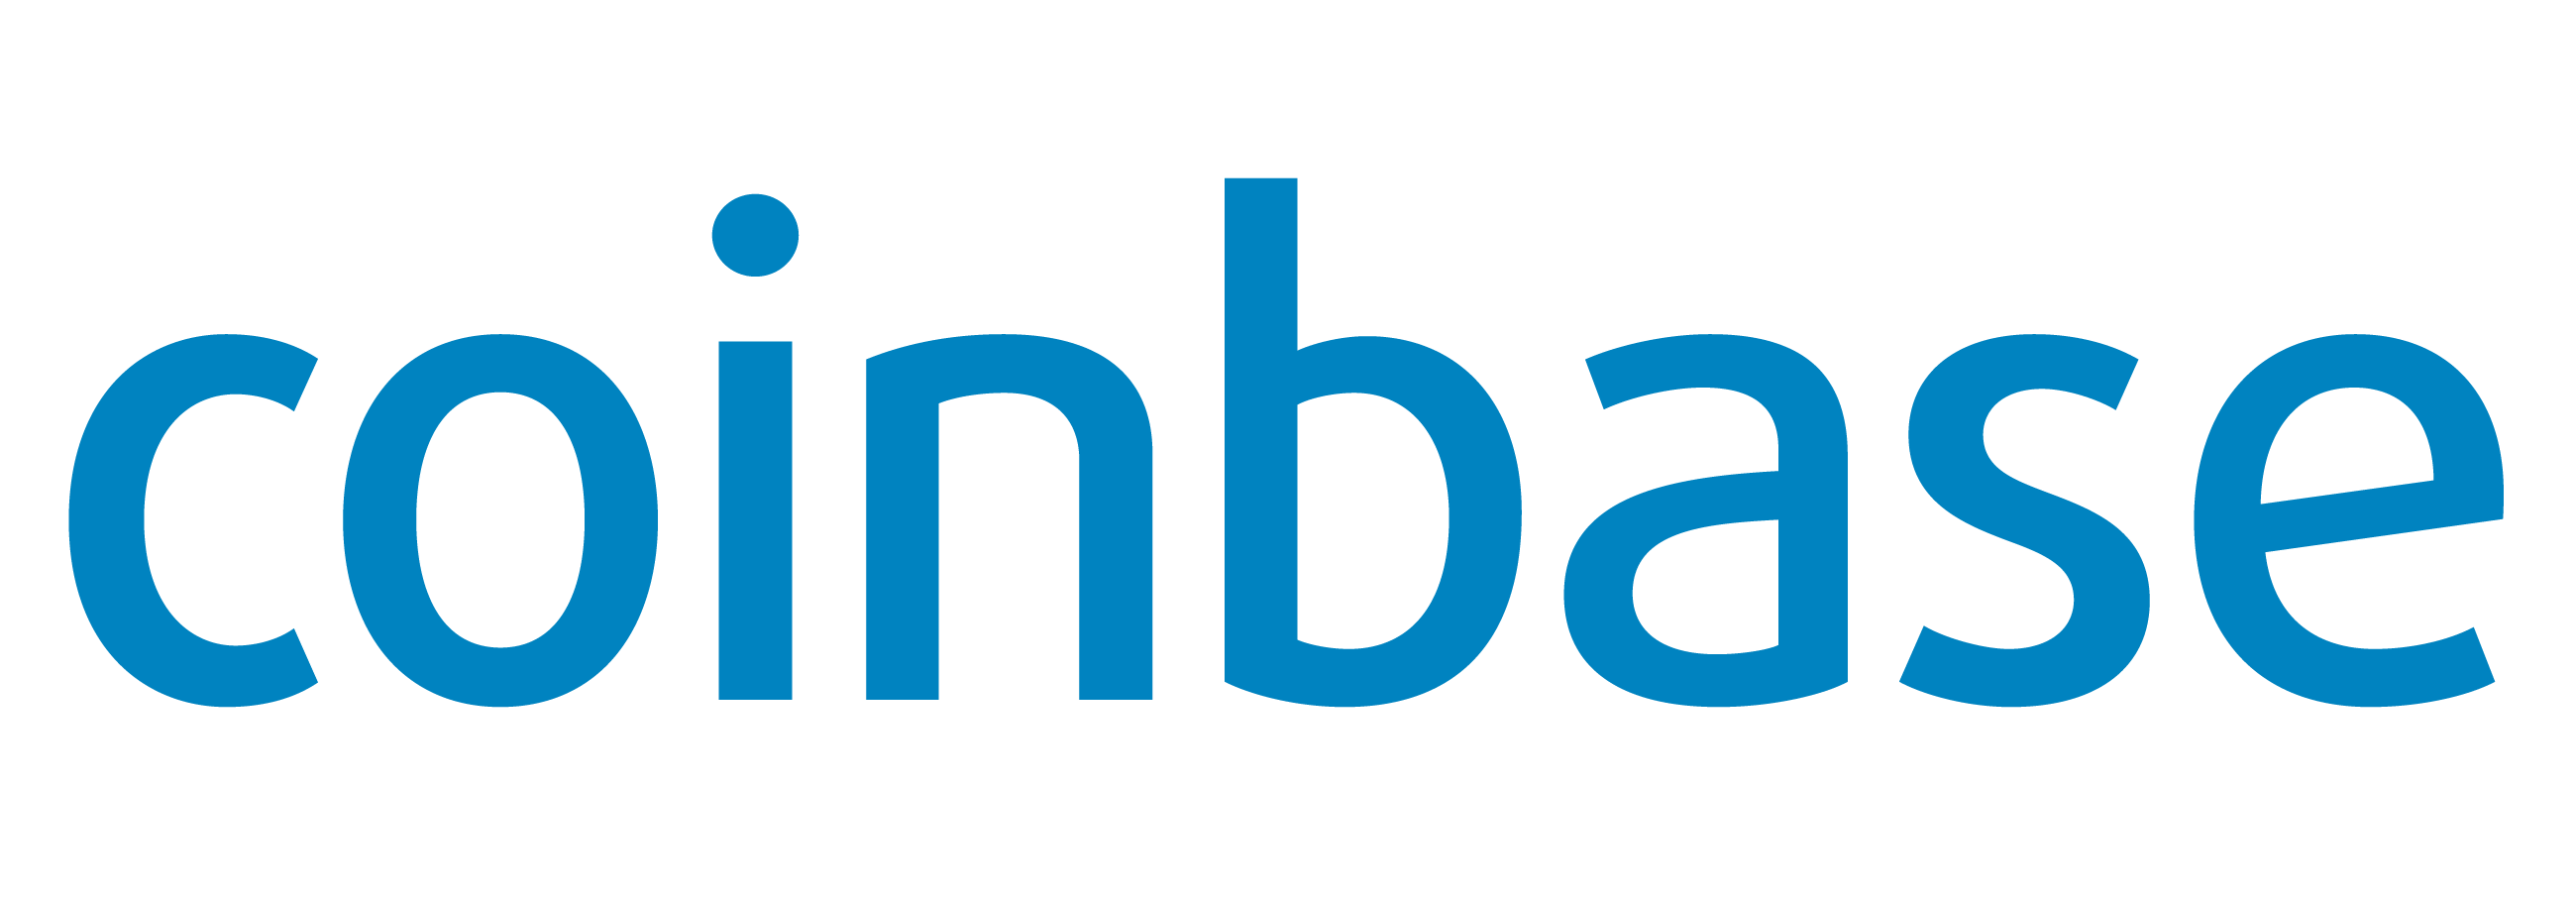 Fichier:Coinbase Logo 2013.png — Wikipédia